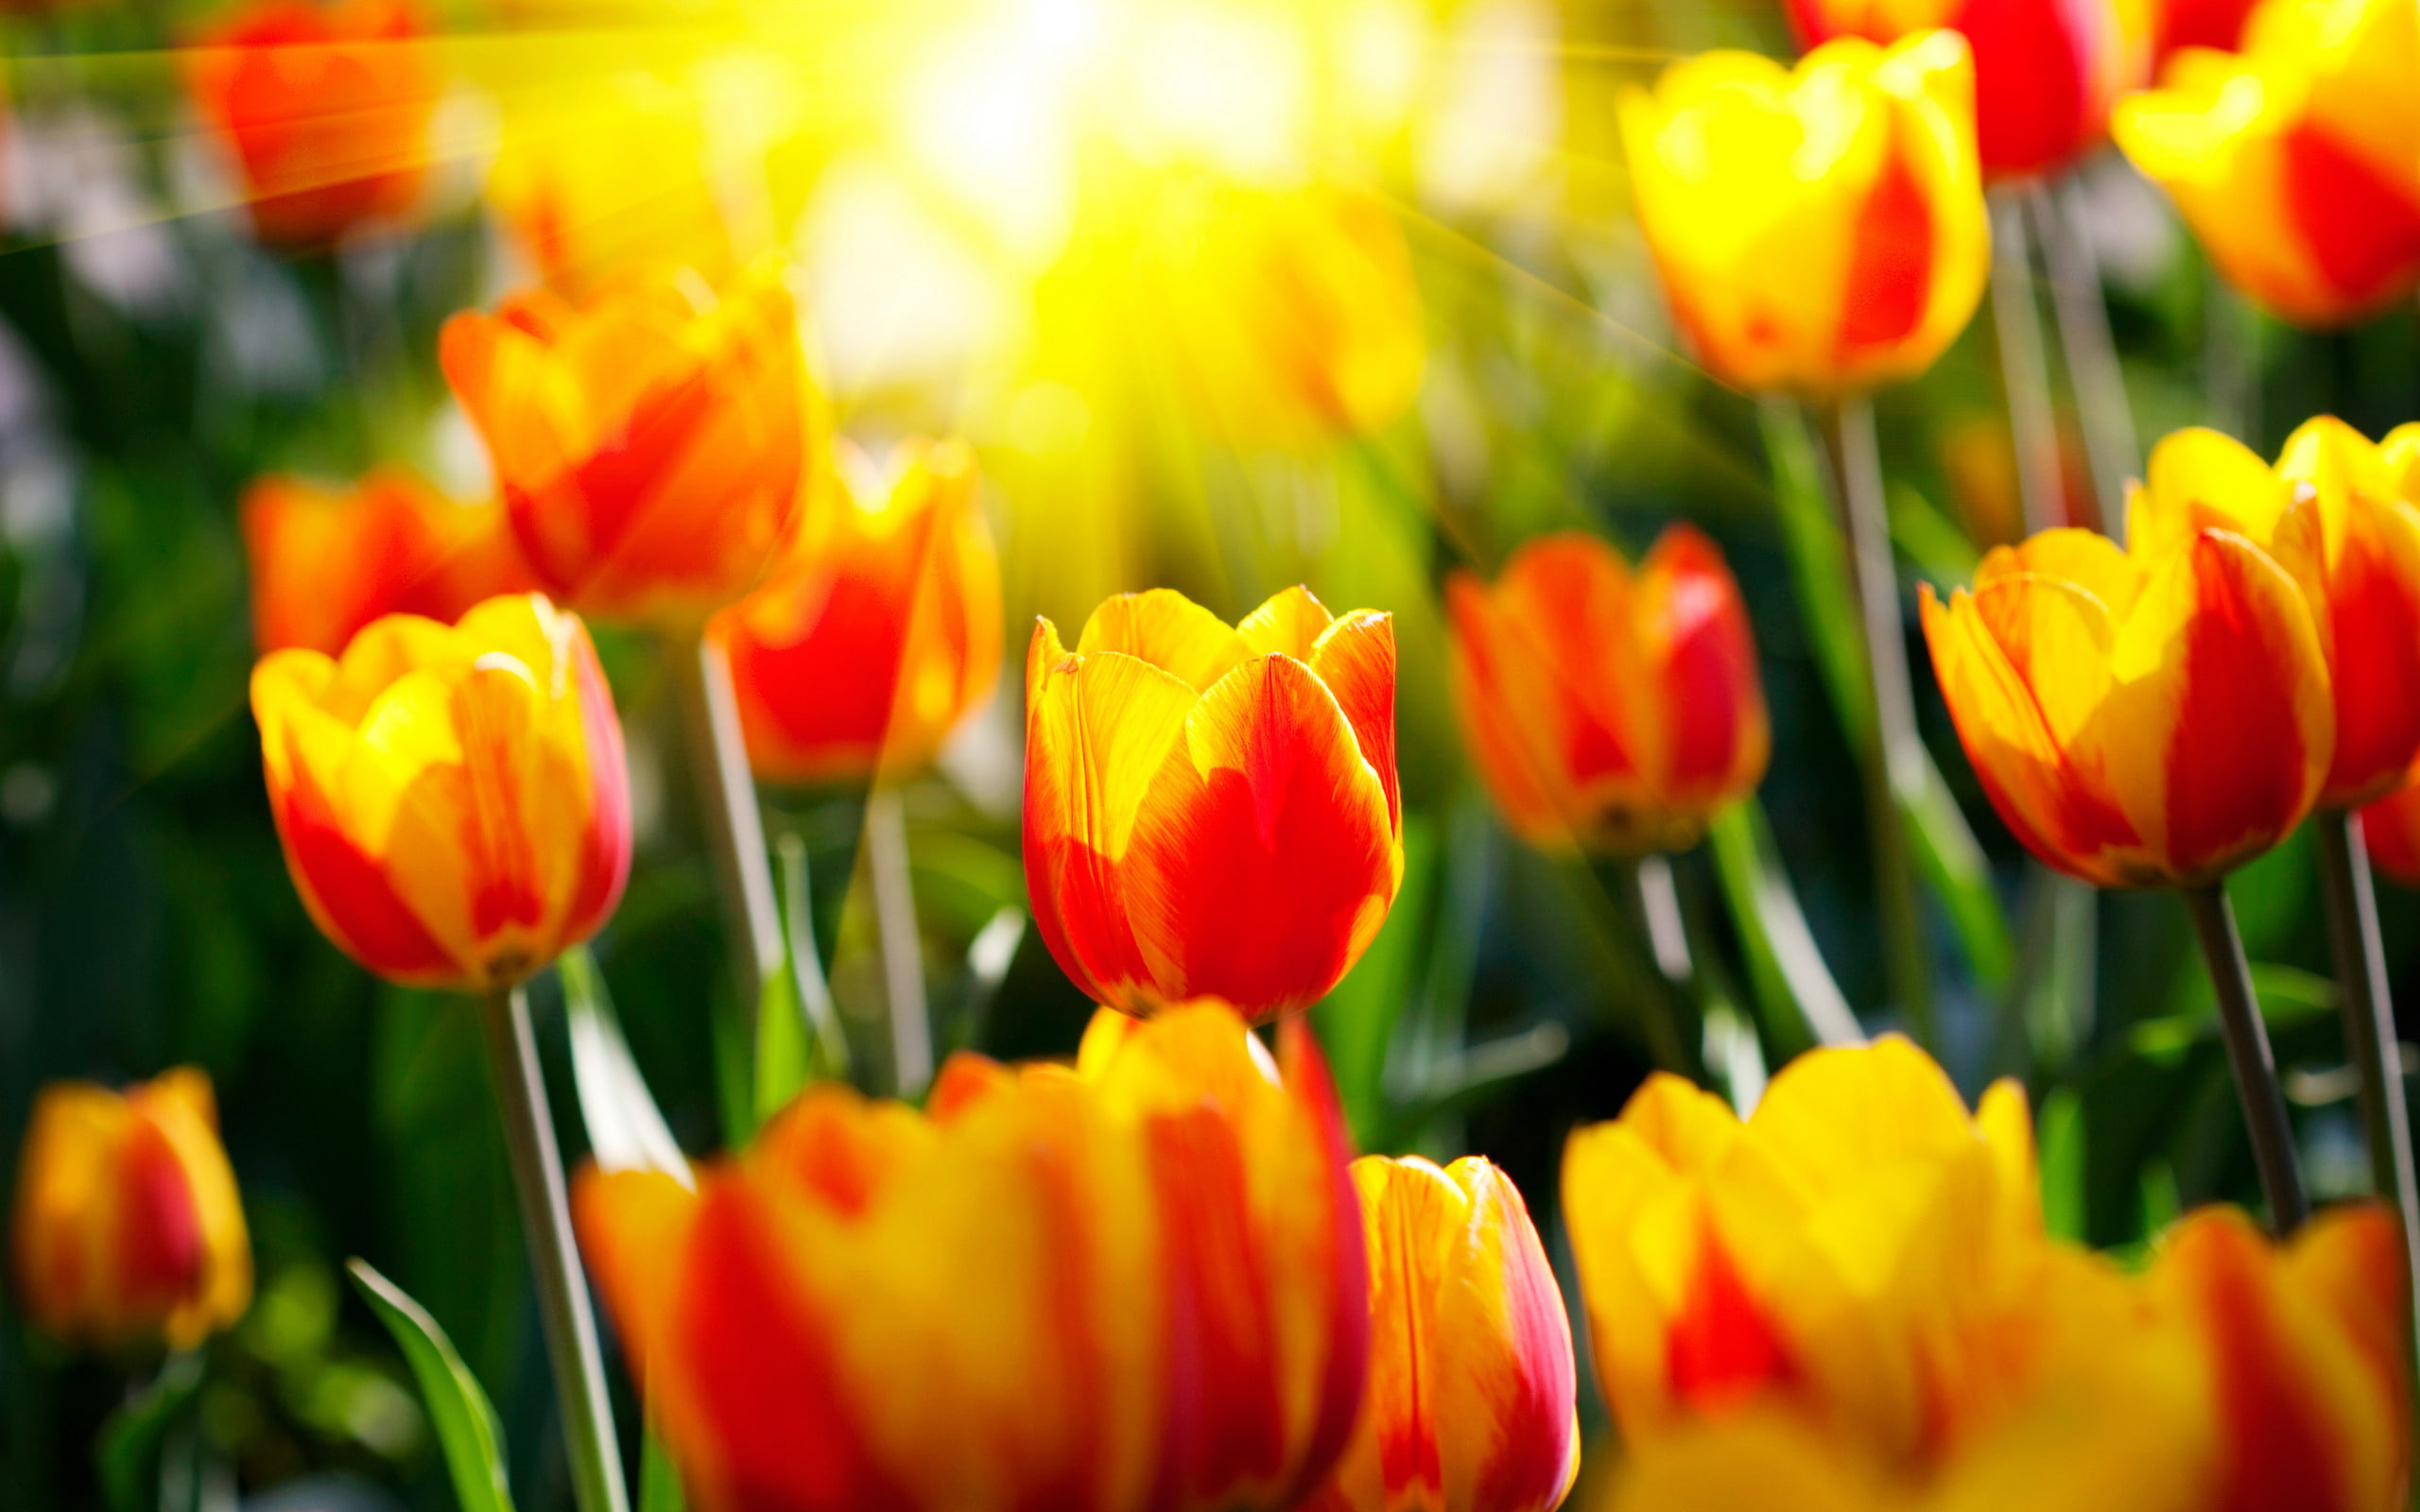 Sunshine Tulip Flowers, nature and landscape